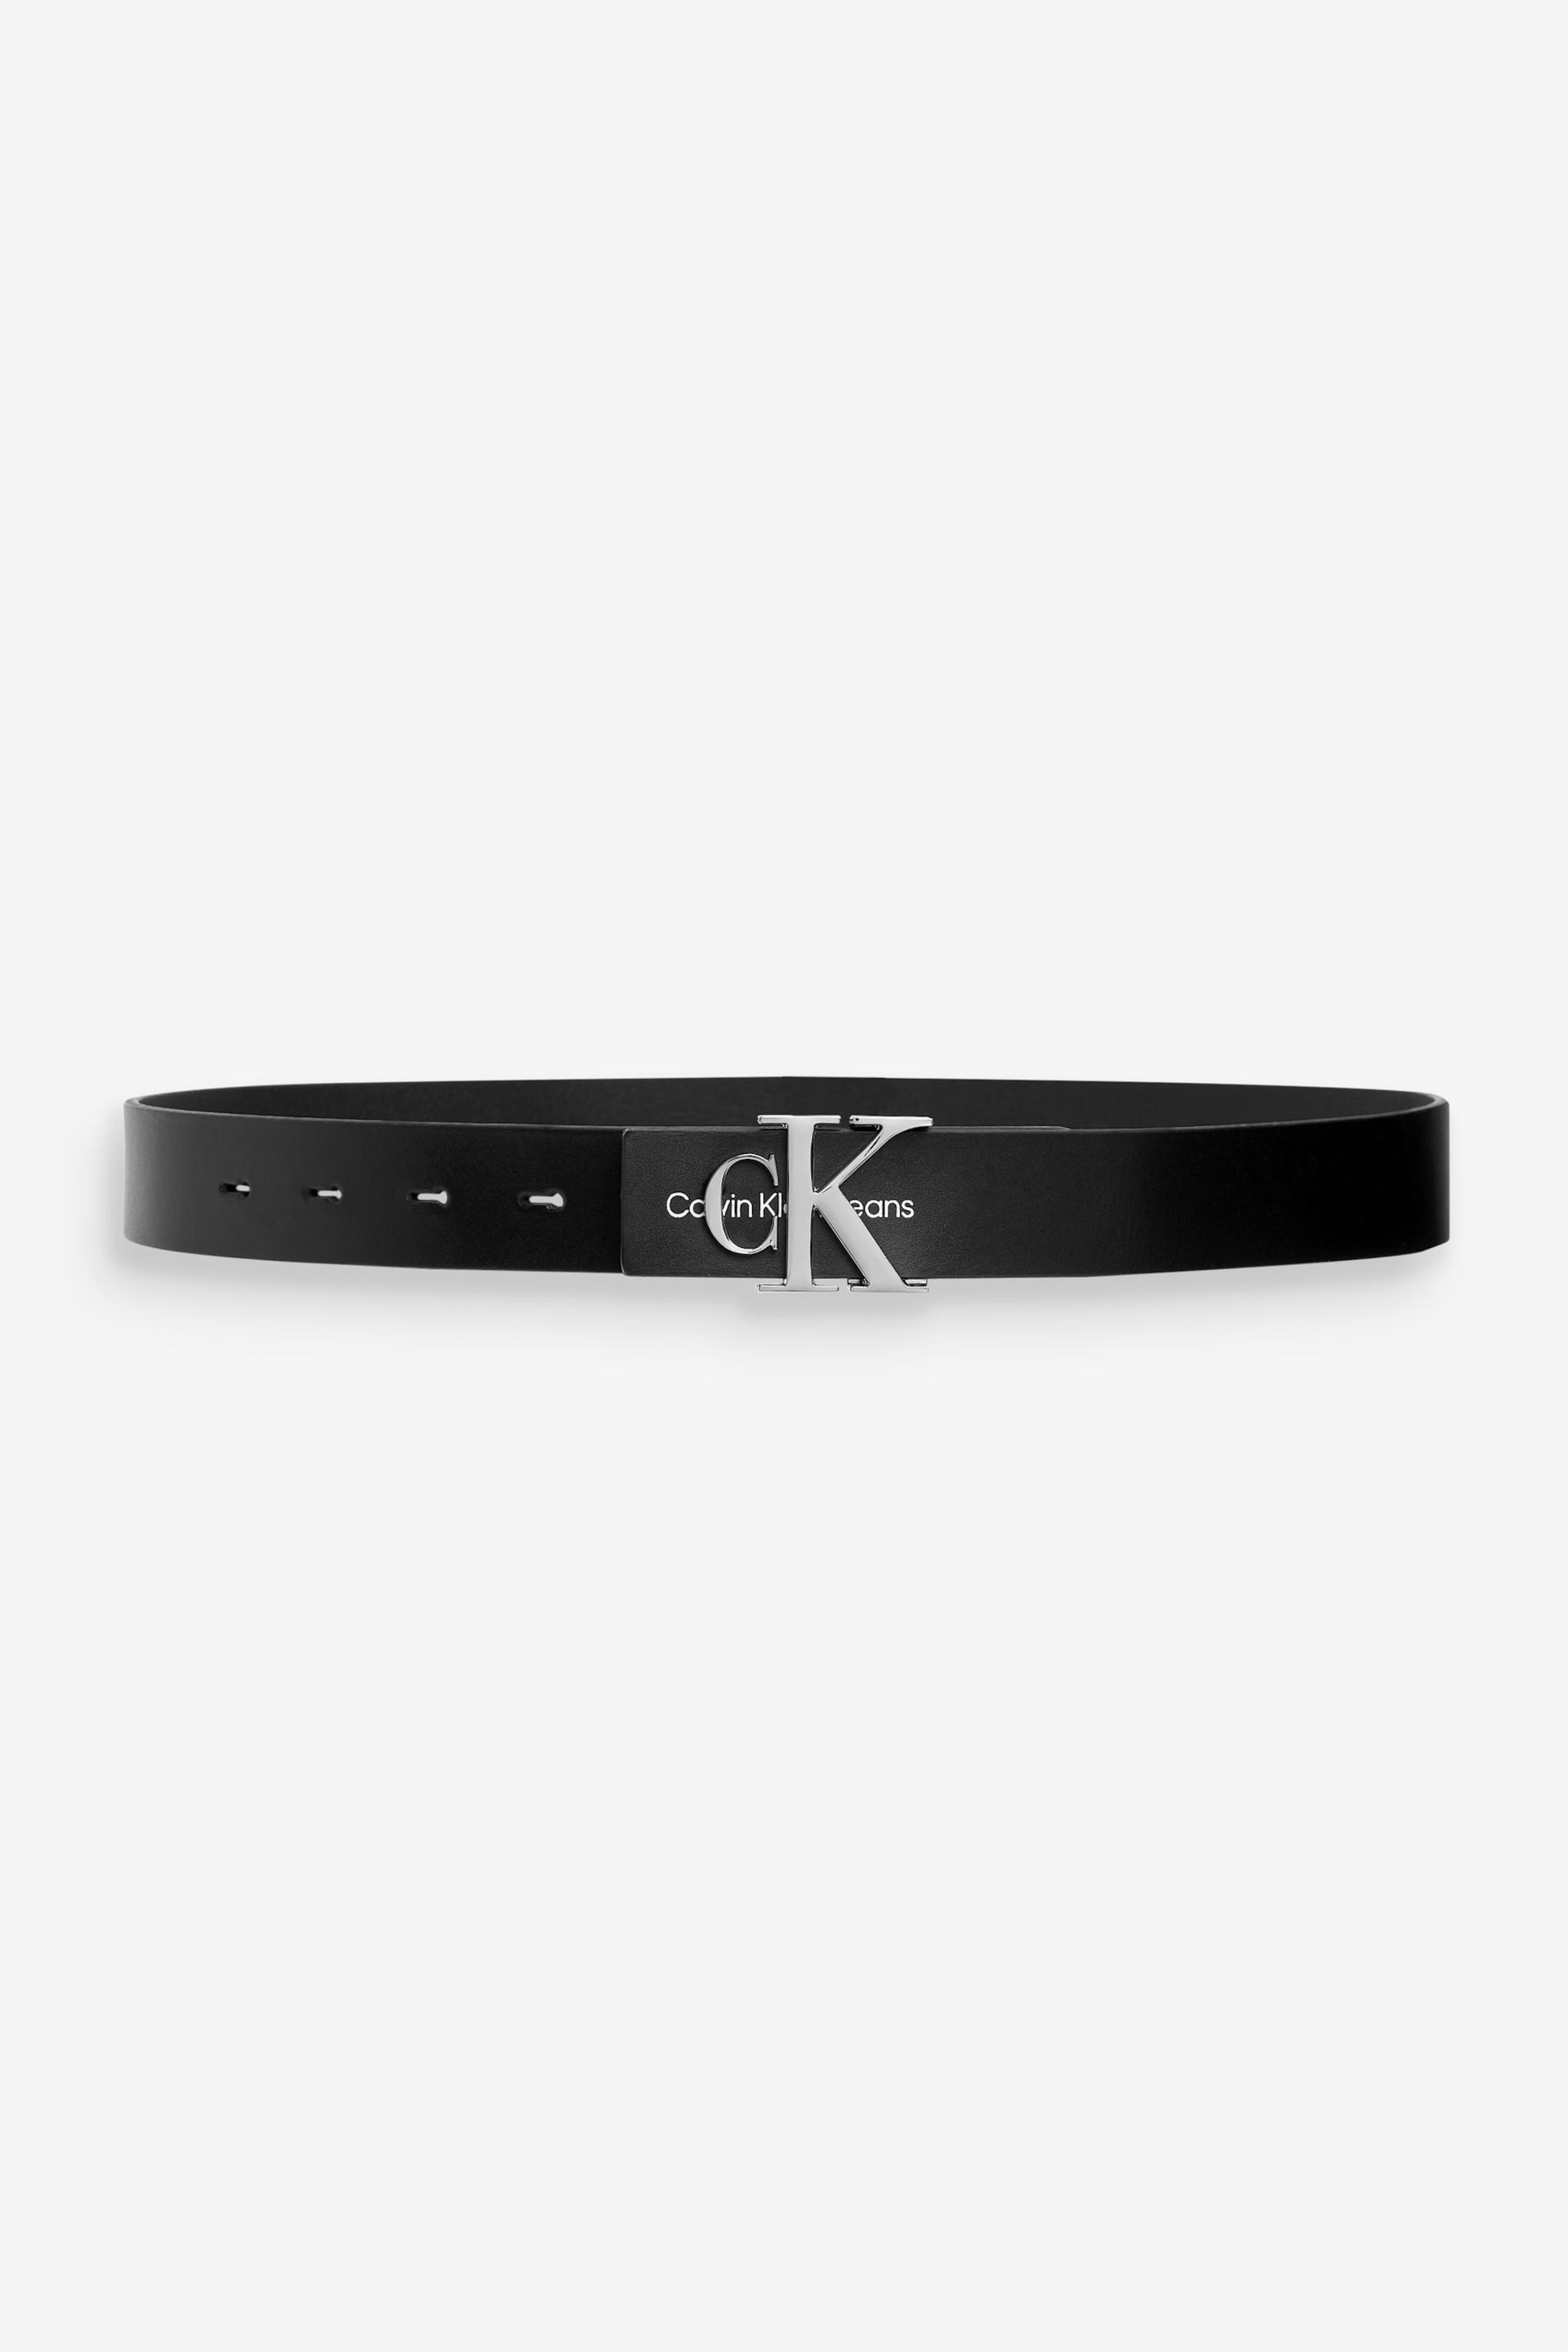 Calvin Klein Black Hardware Belt - Image 1 of 3